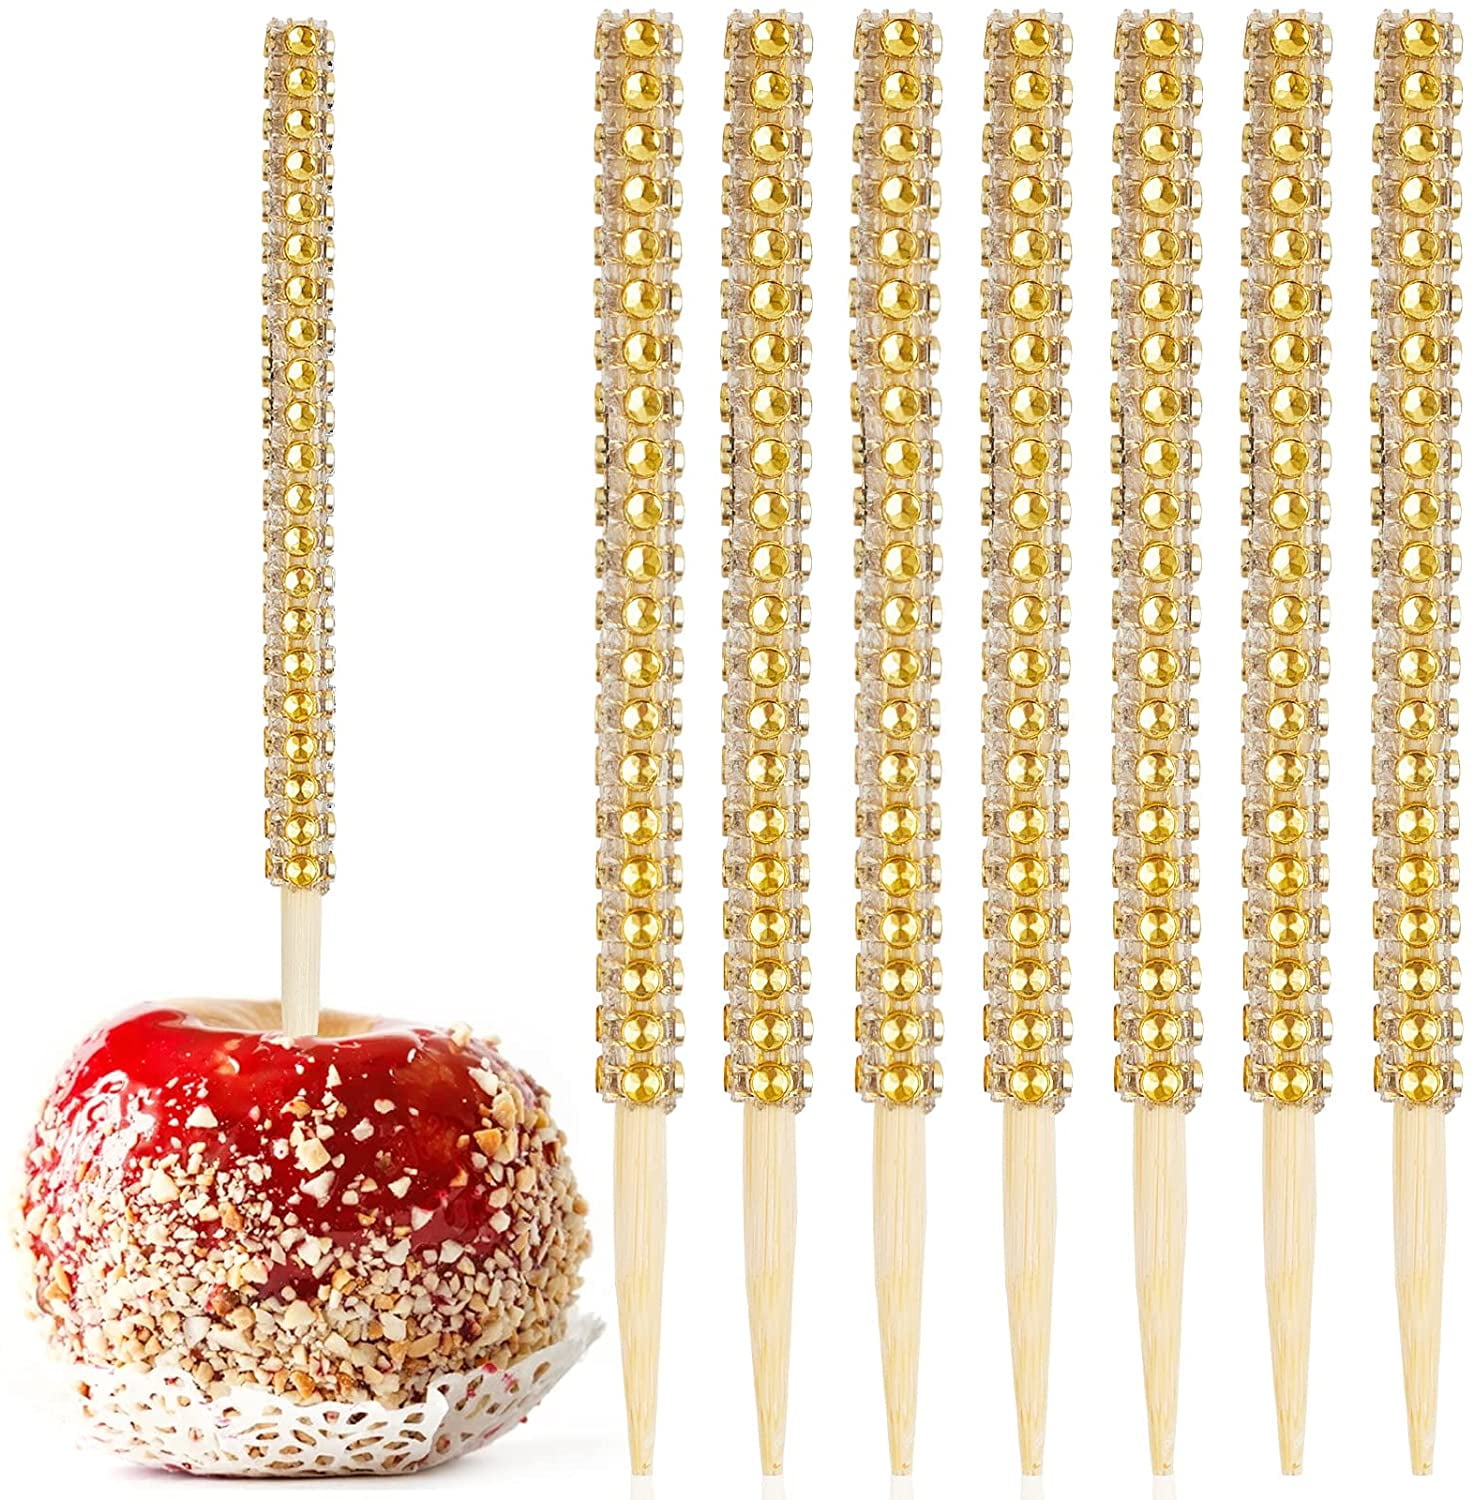 100 Gold Bling Candy Apple Sticks Gold Rhinestone Candy Apple Sticks 